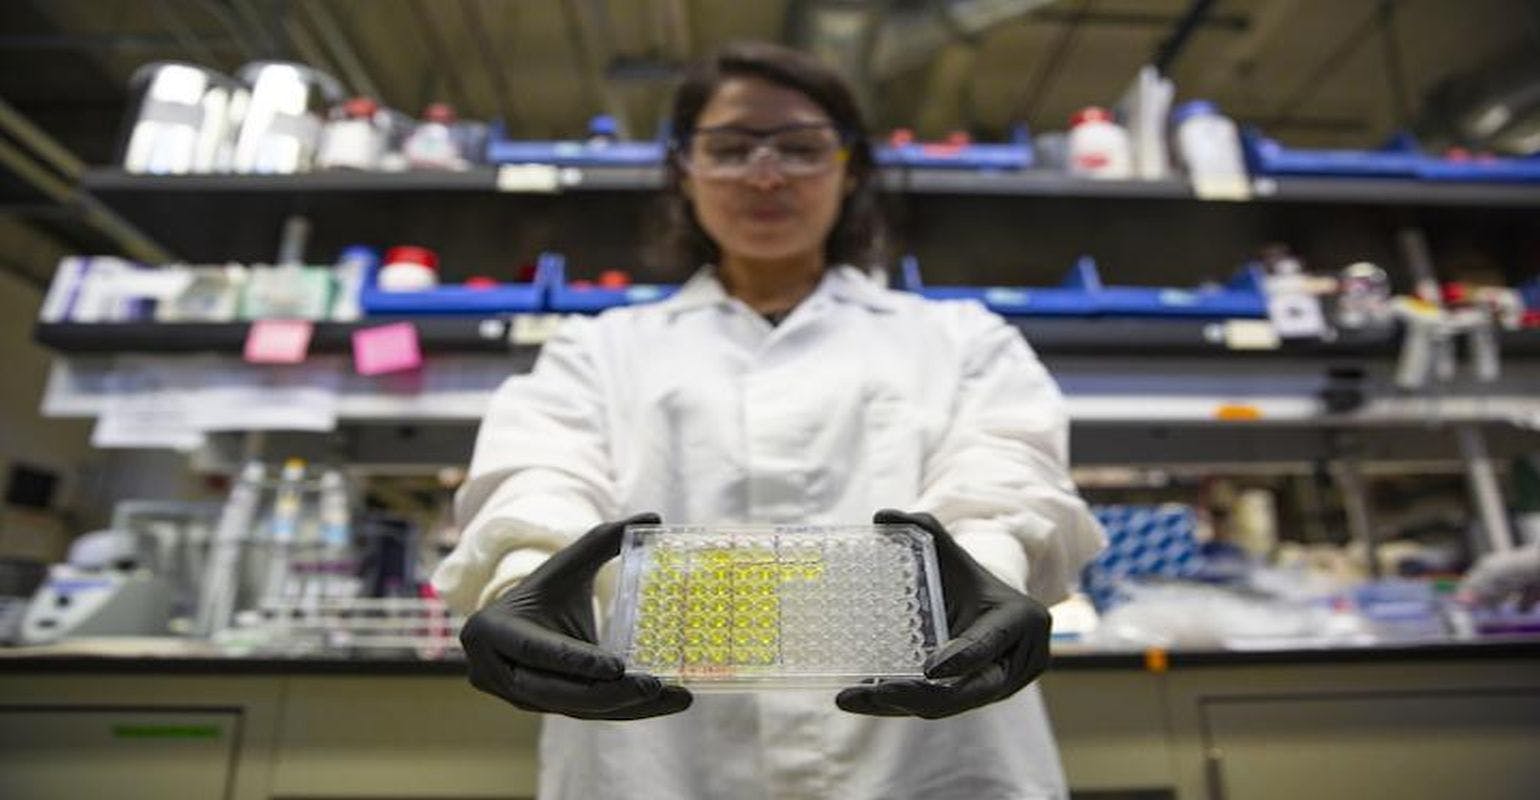 New Test Rapidly Identifies Antibiotic-Resistant Superbugs